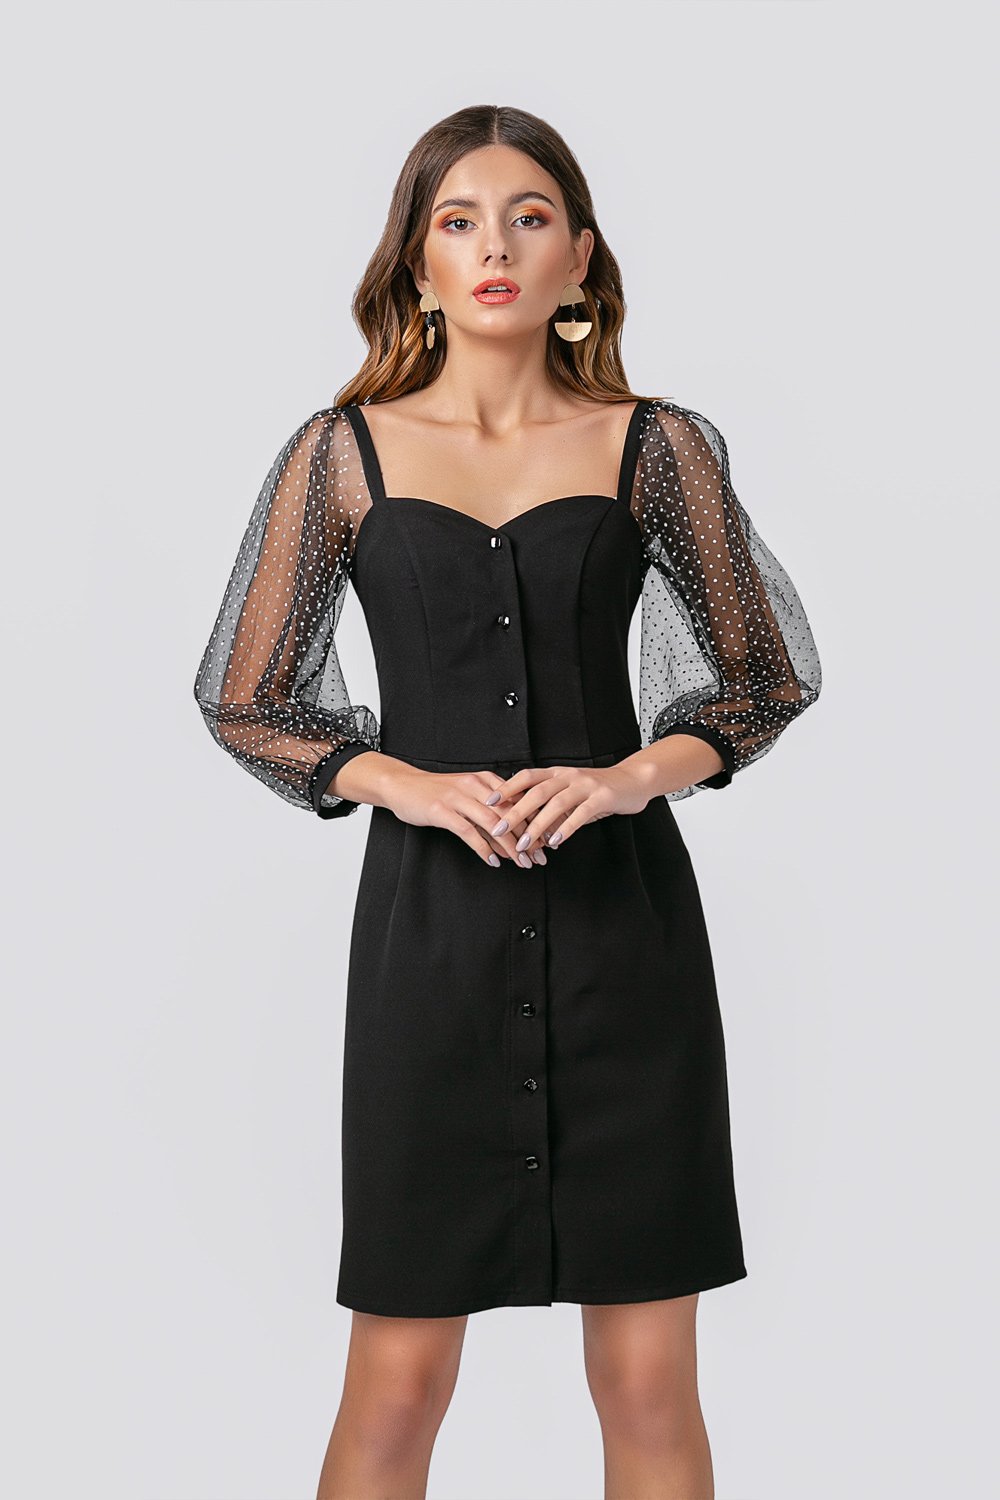 Black elegant dress